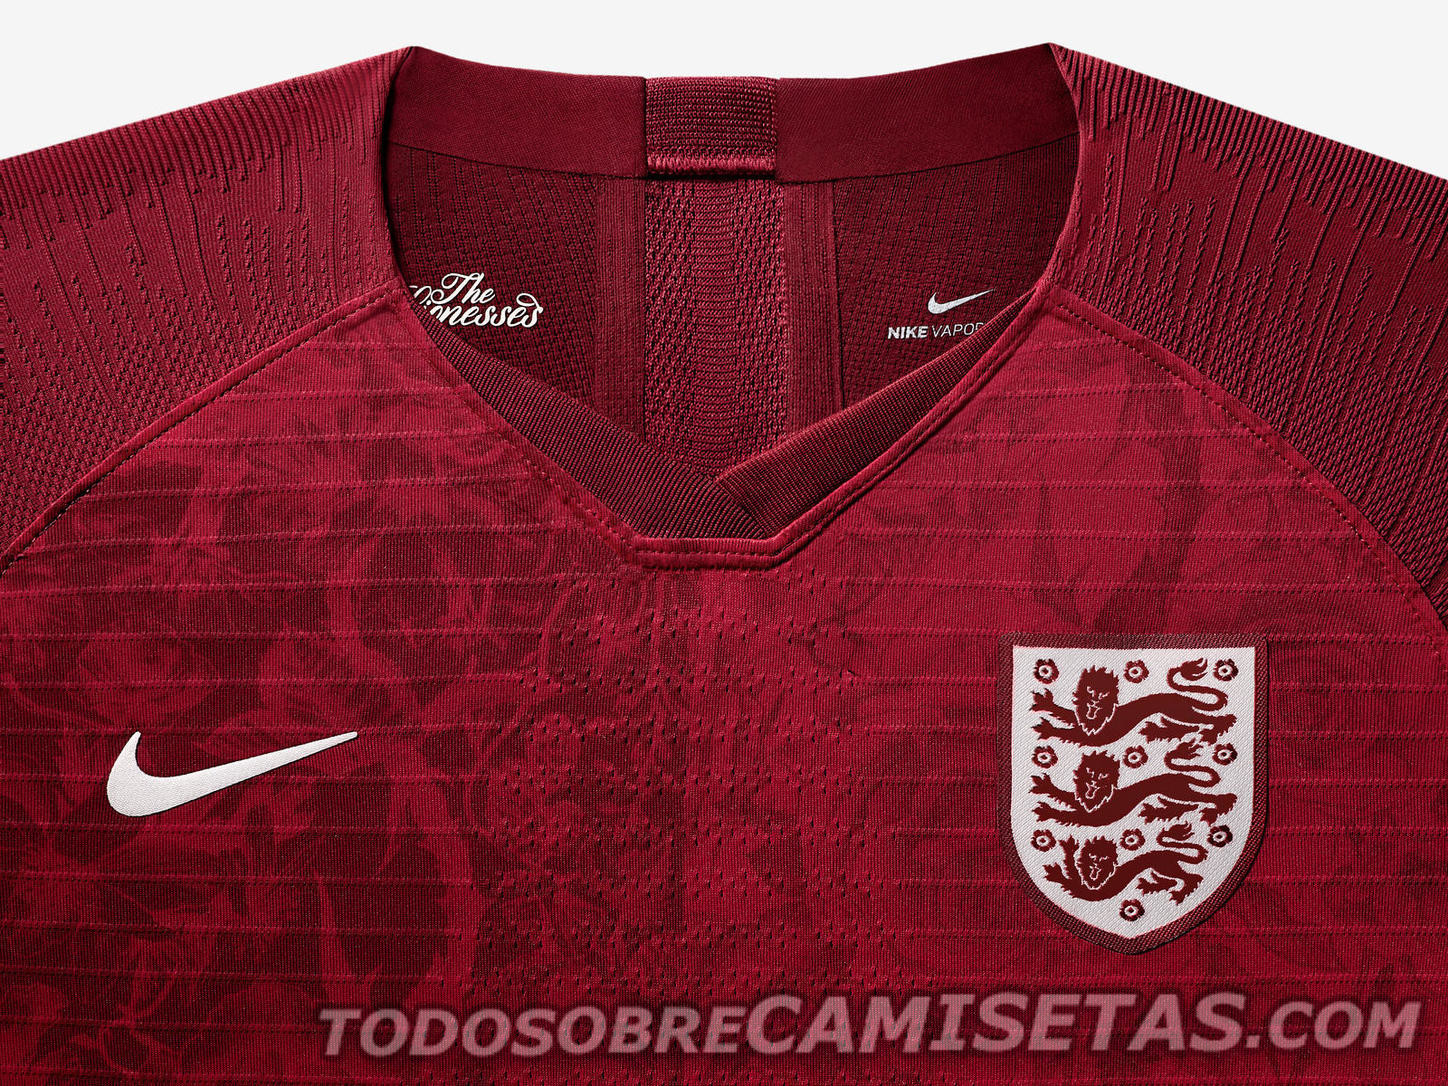 England 2019 Women's World Cup Nike Kits